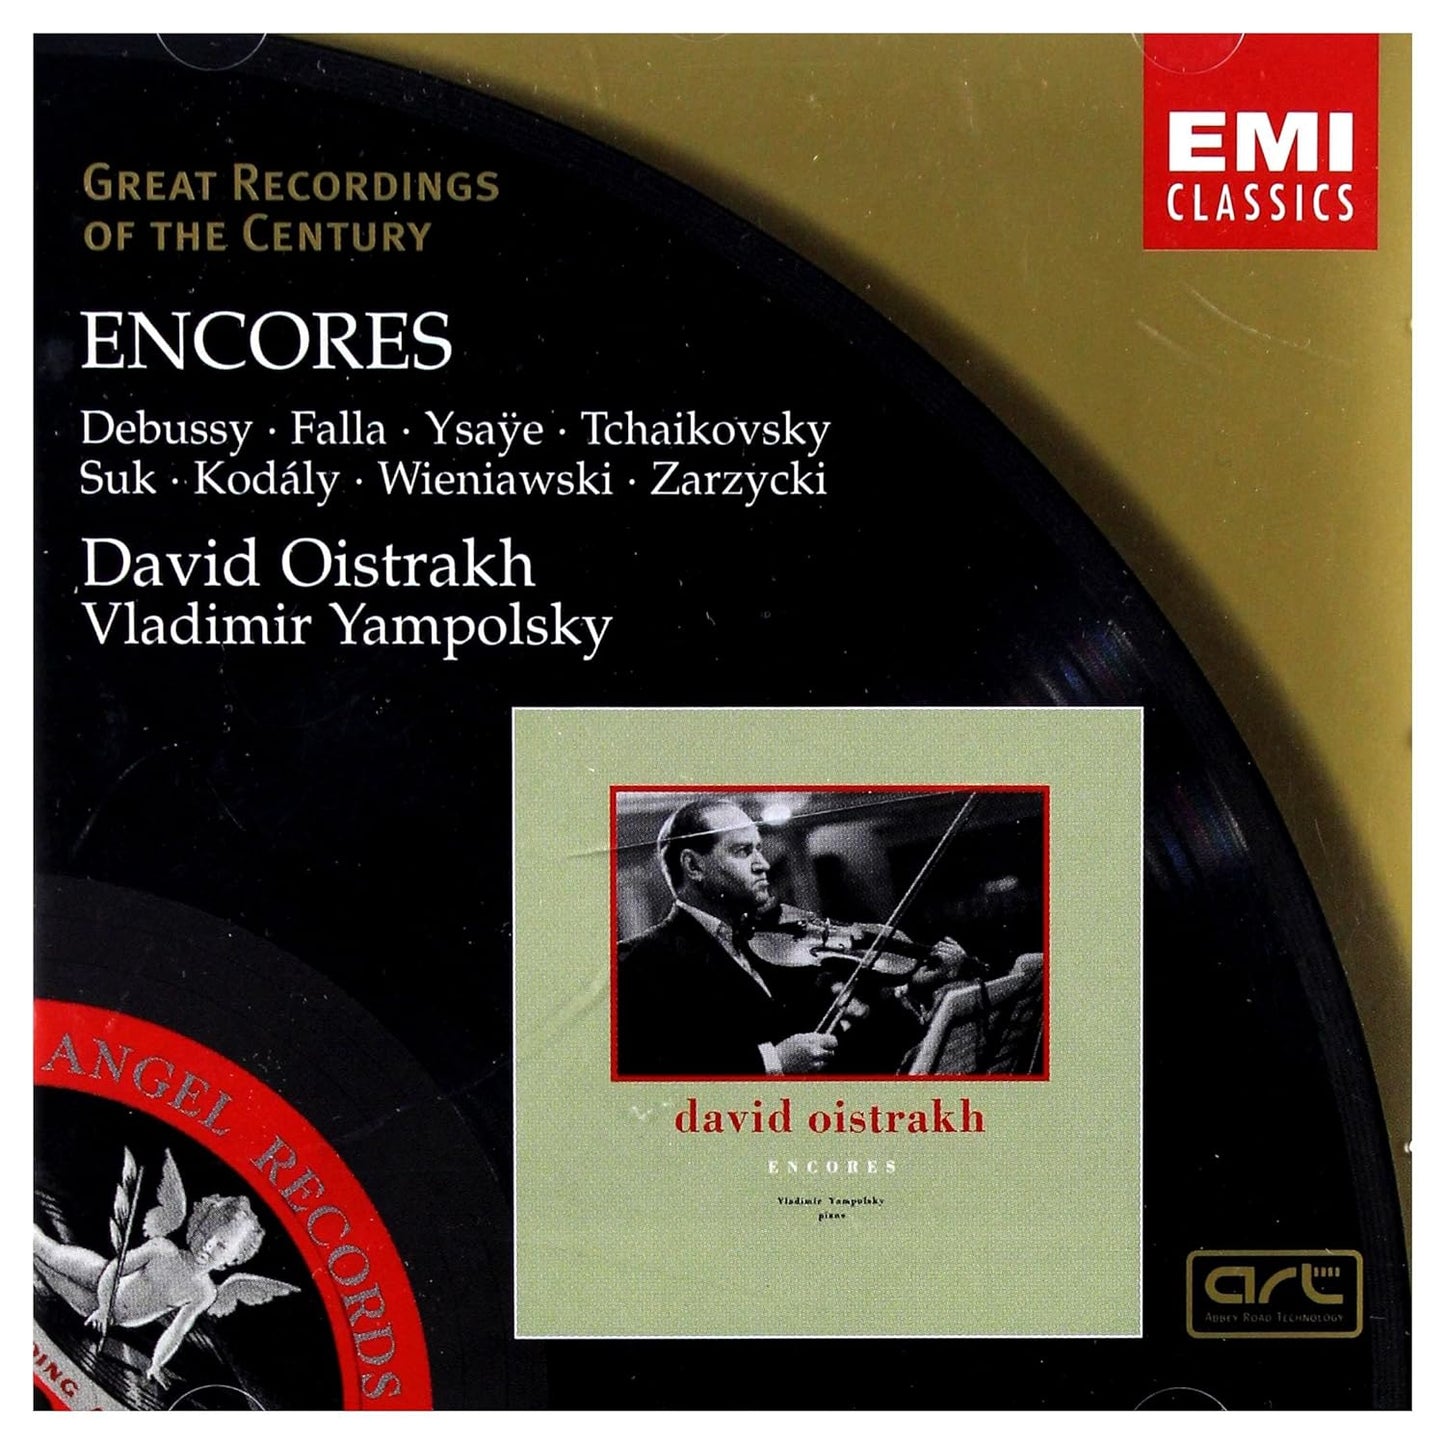 DAVID OISTRAKH: Encores - with Vladimir Yampolsky